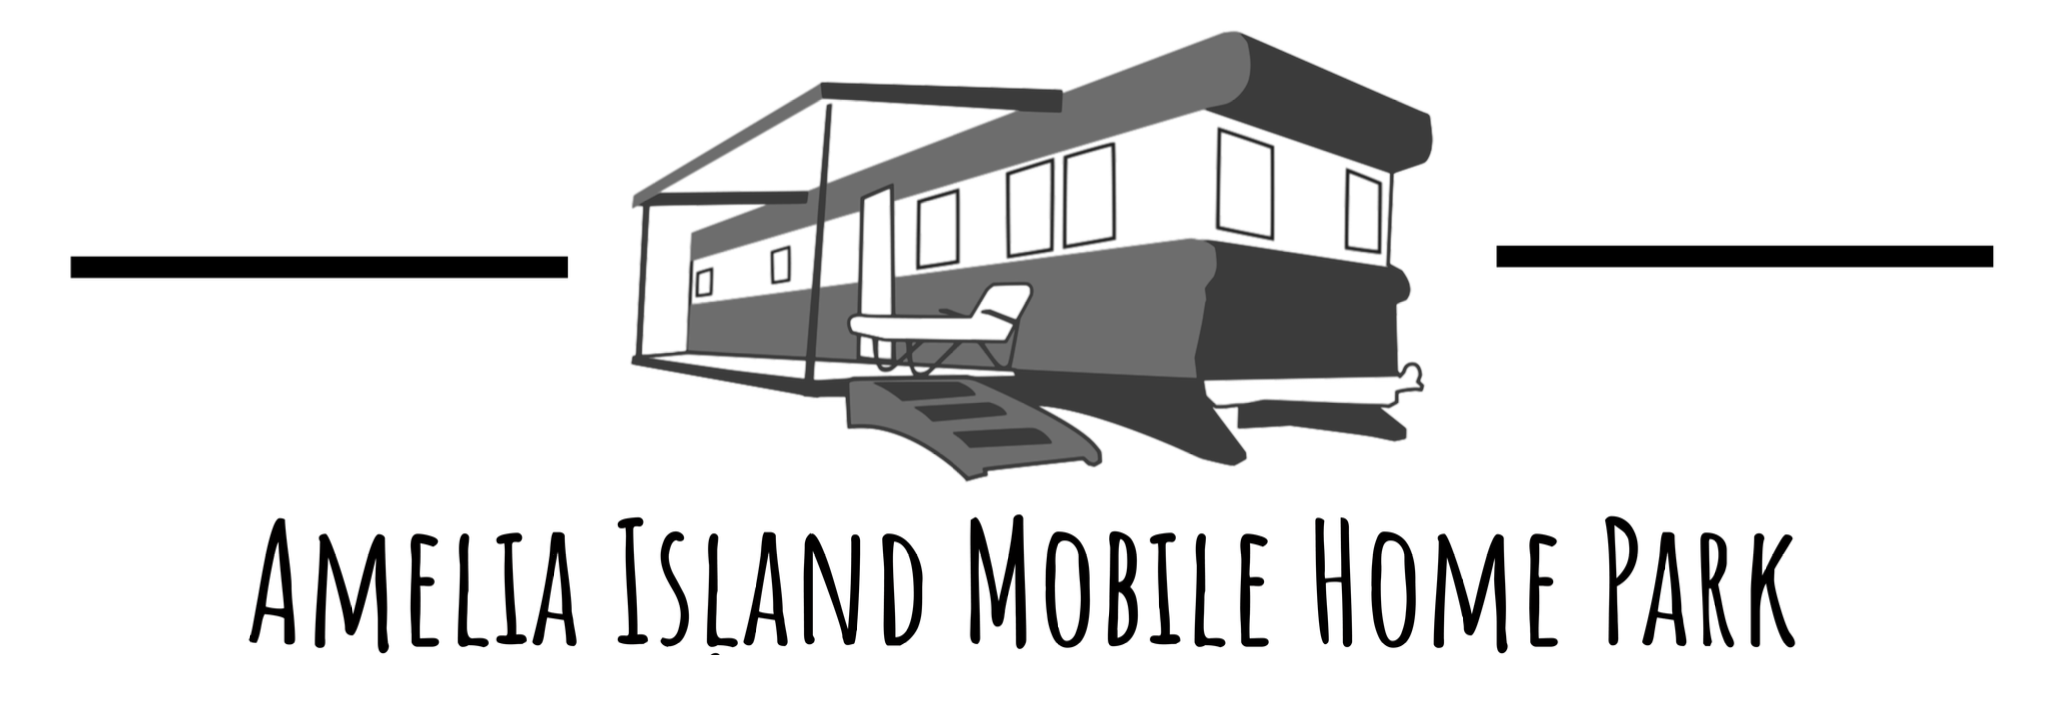 Amelia Island Mobile Home Park